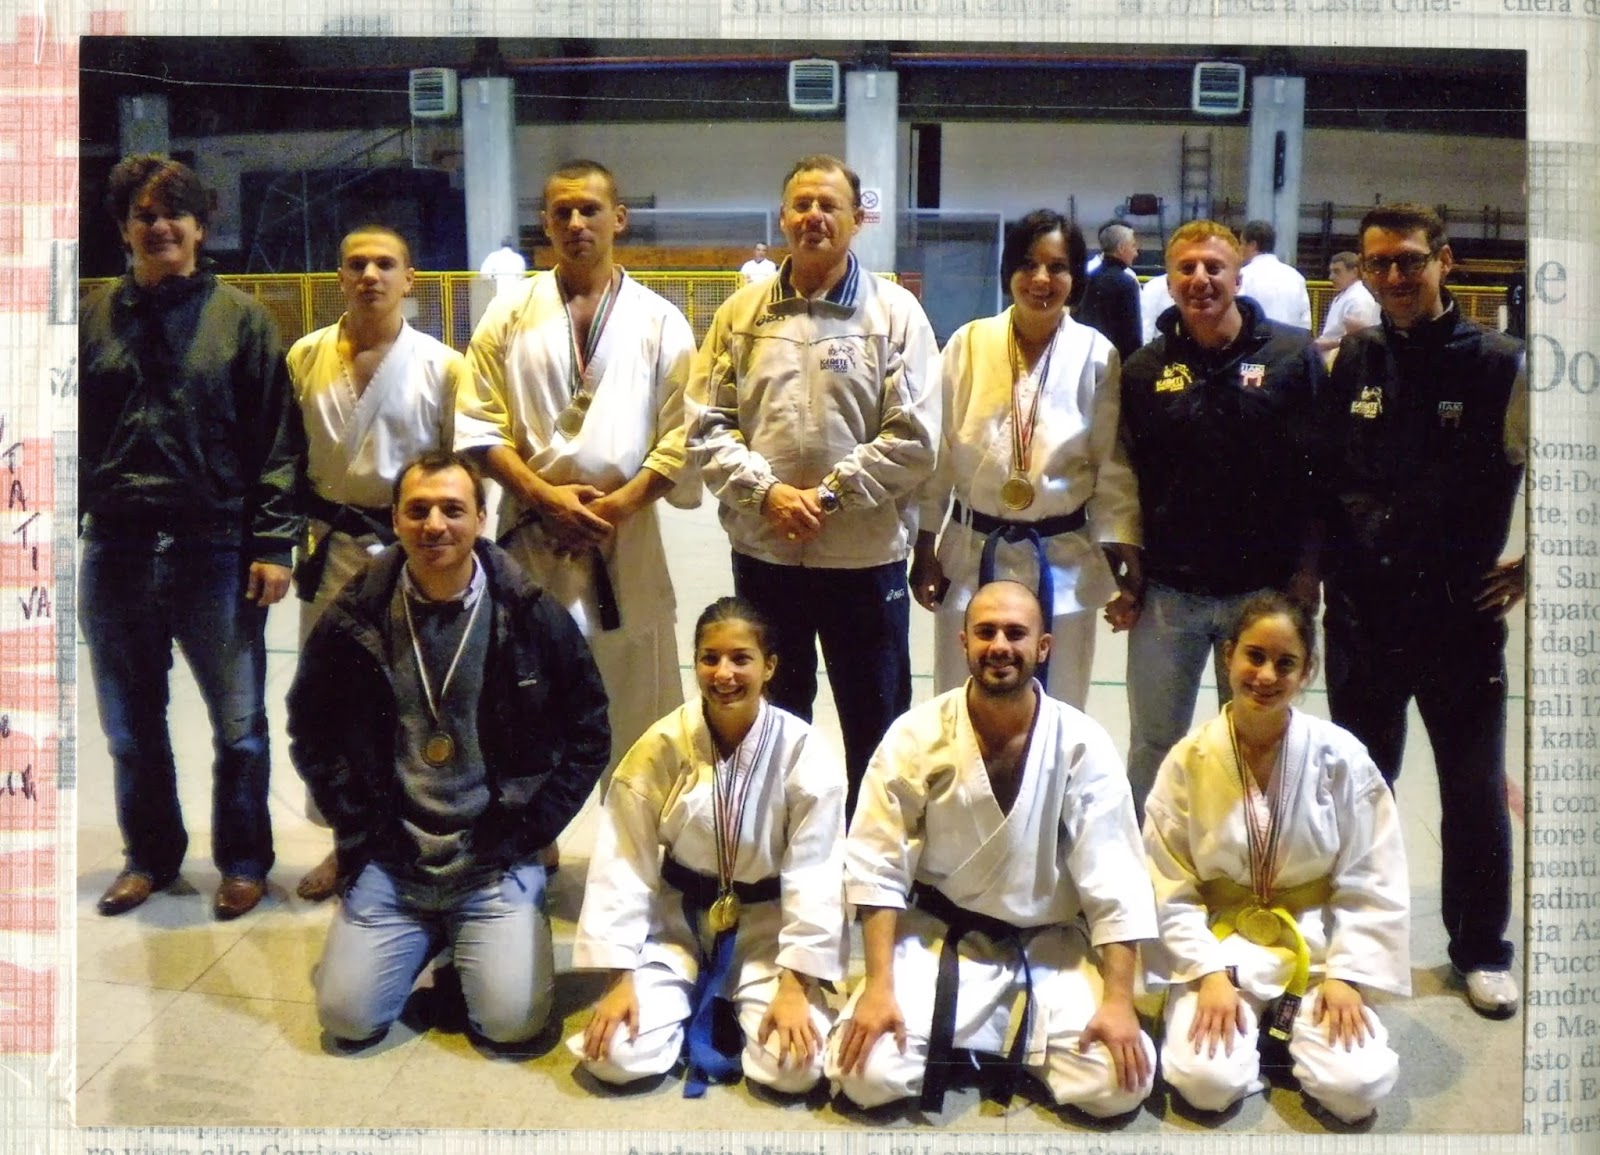 Shotokan Karate Club Ravenna: Galleria